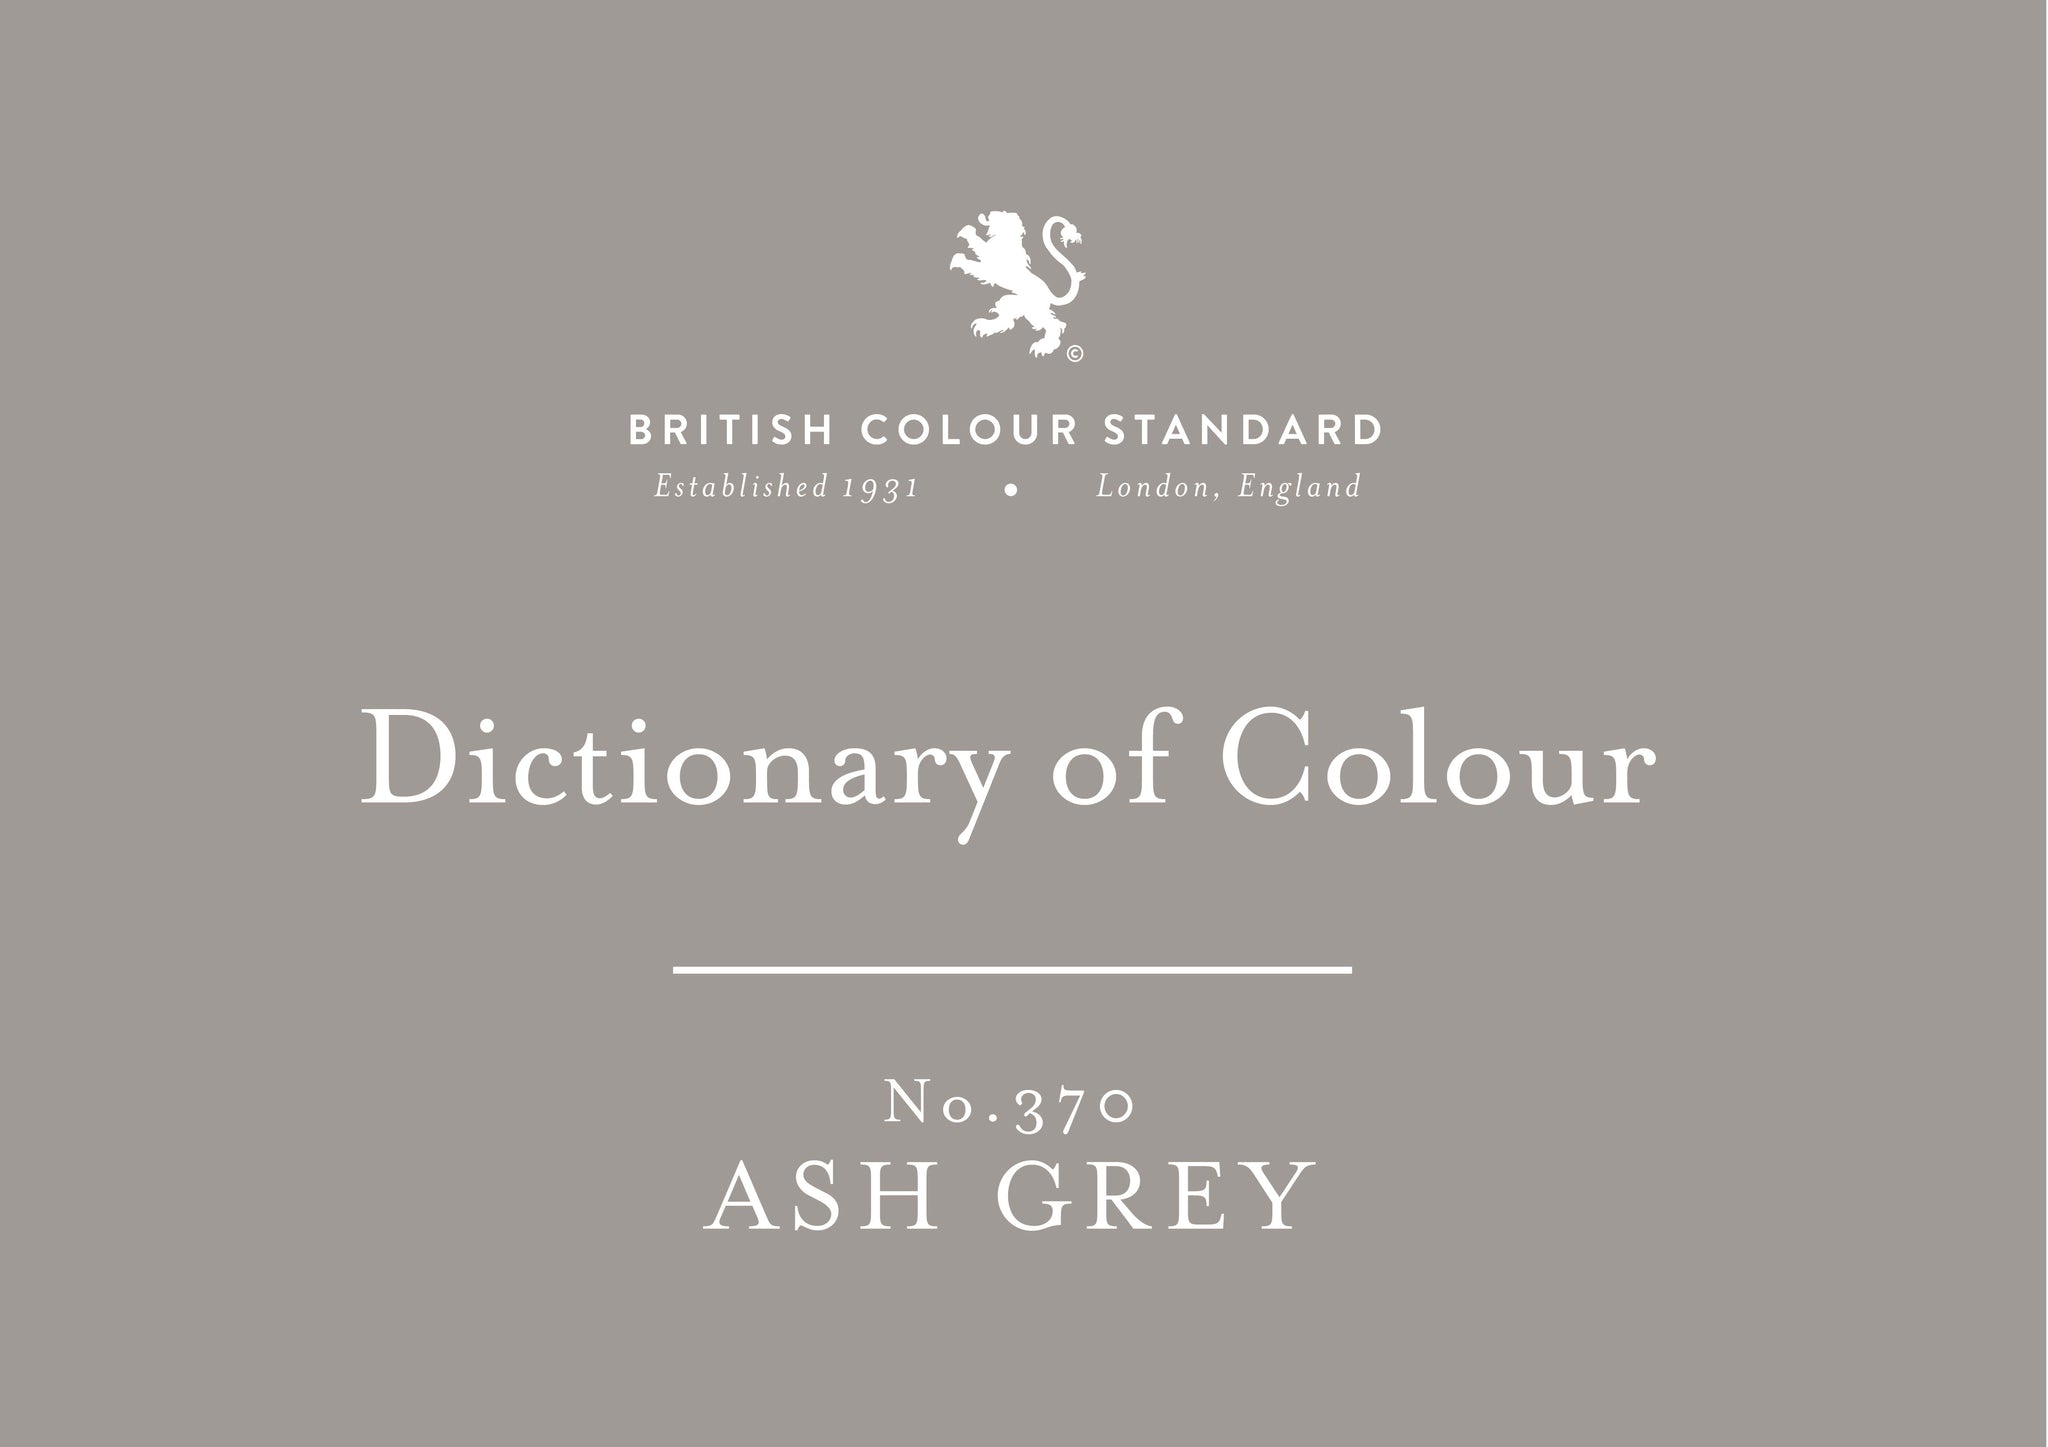 BRITISH COLOUR STANDARD - ASH GREY No. 370